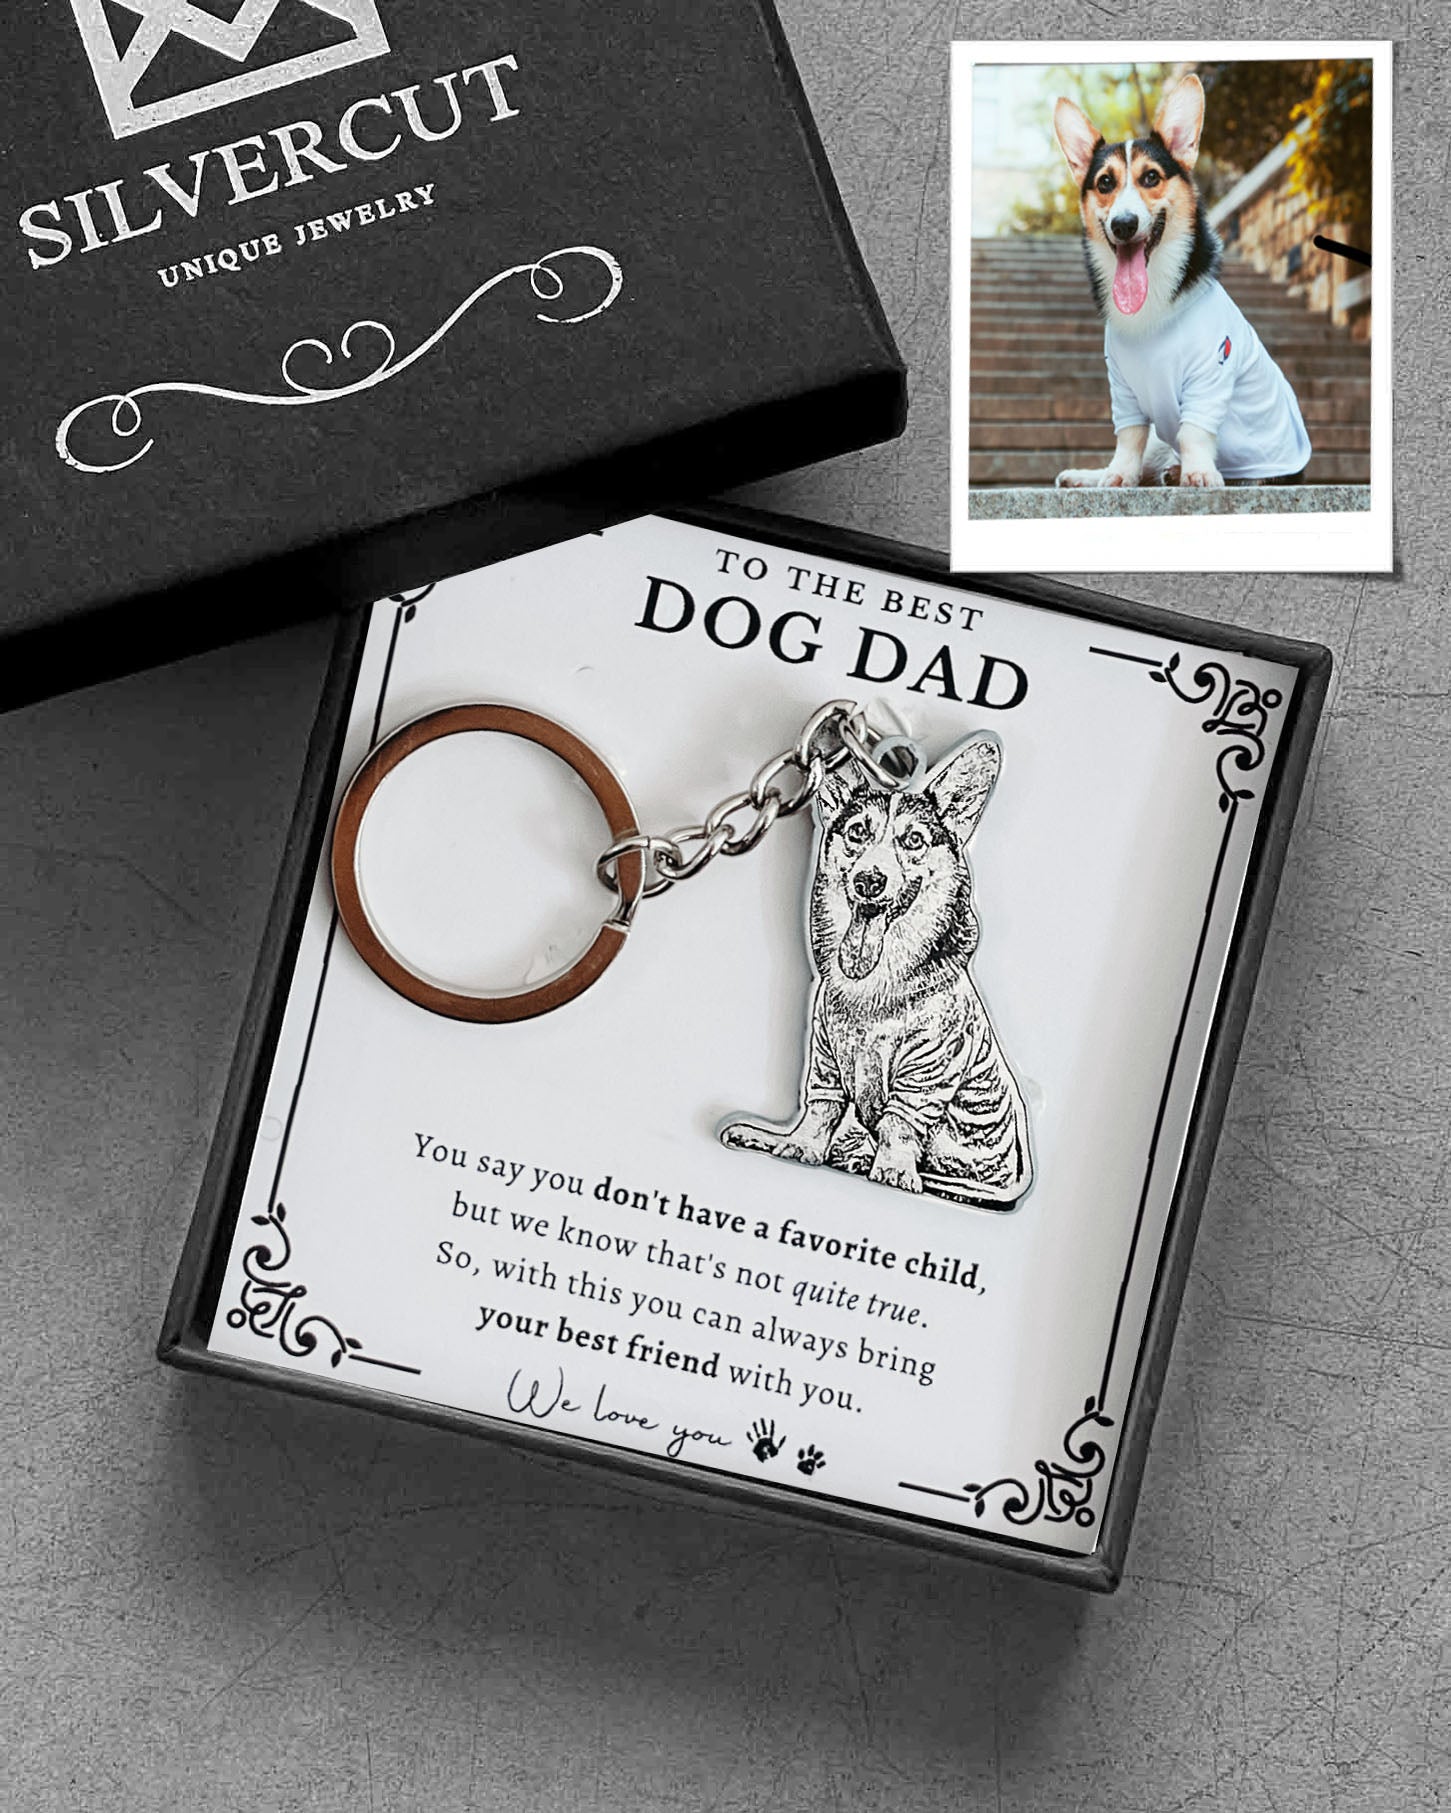 Silvercut® Black Medallion Dog Keychain With Custom Engraved Photo